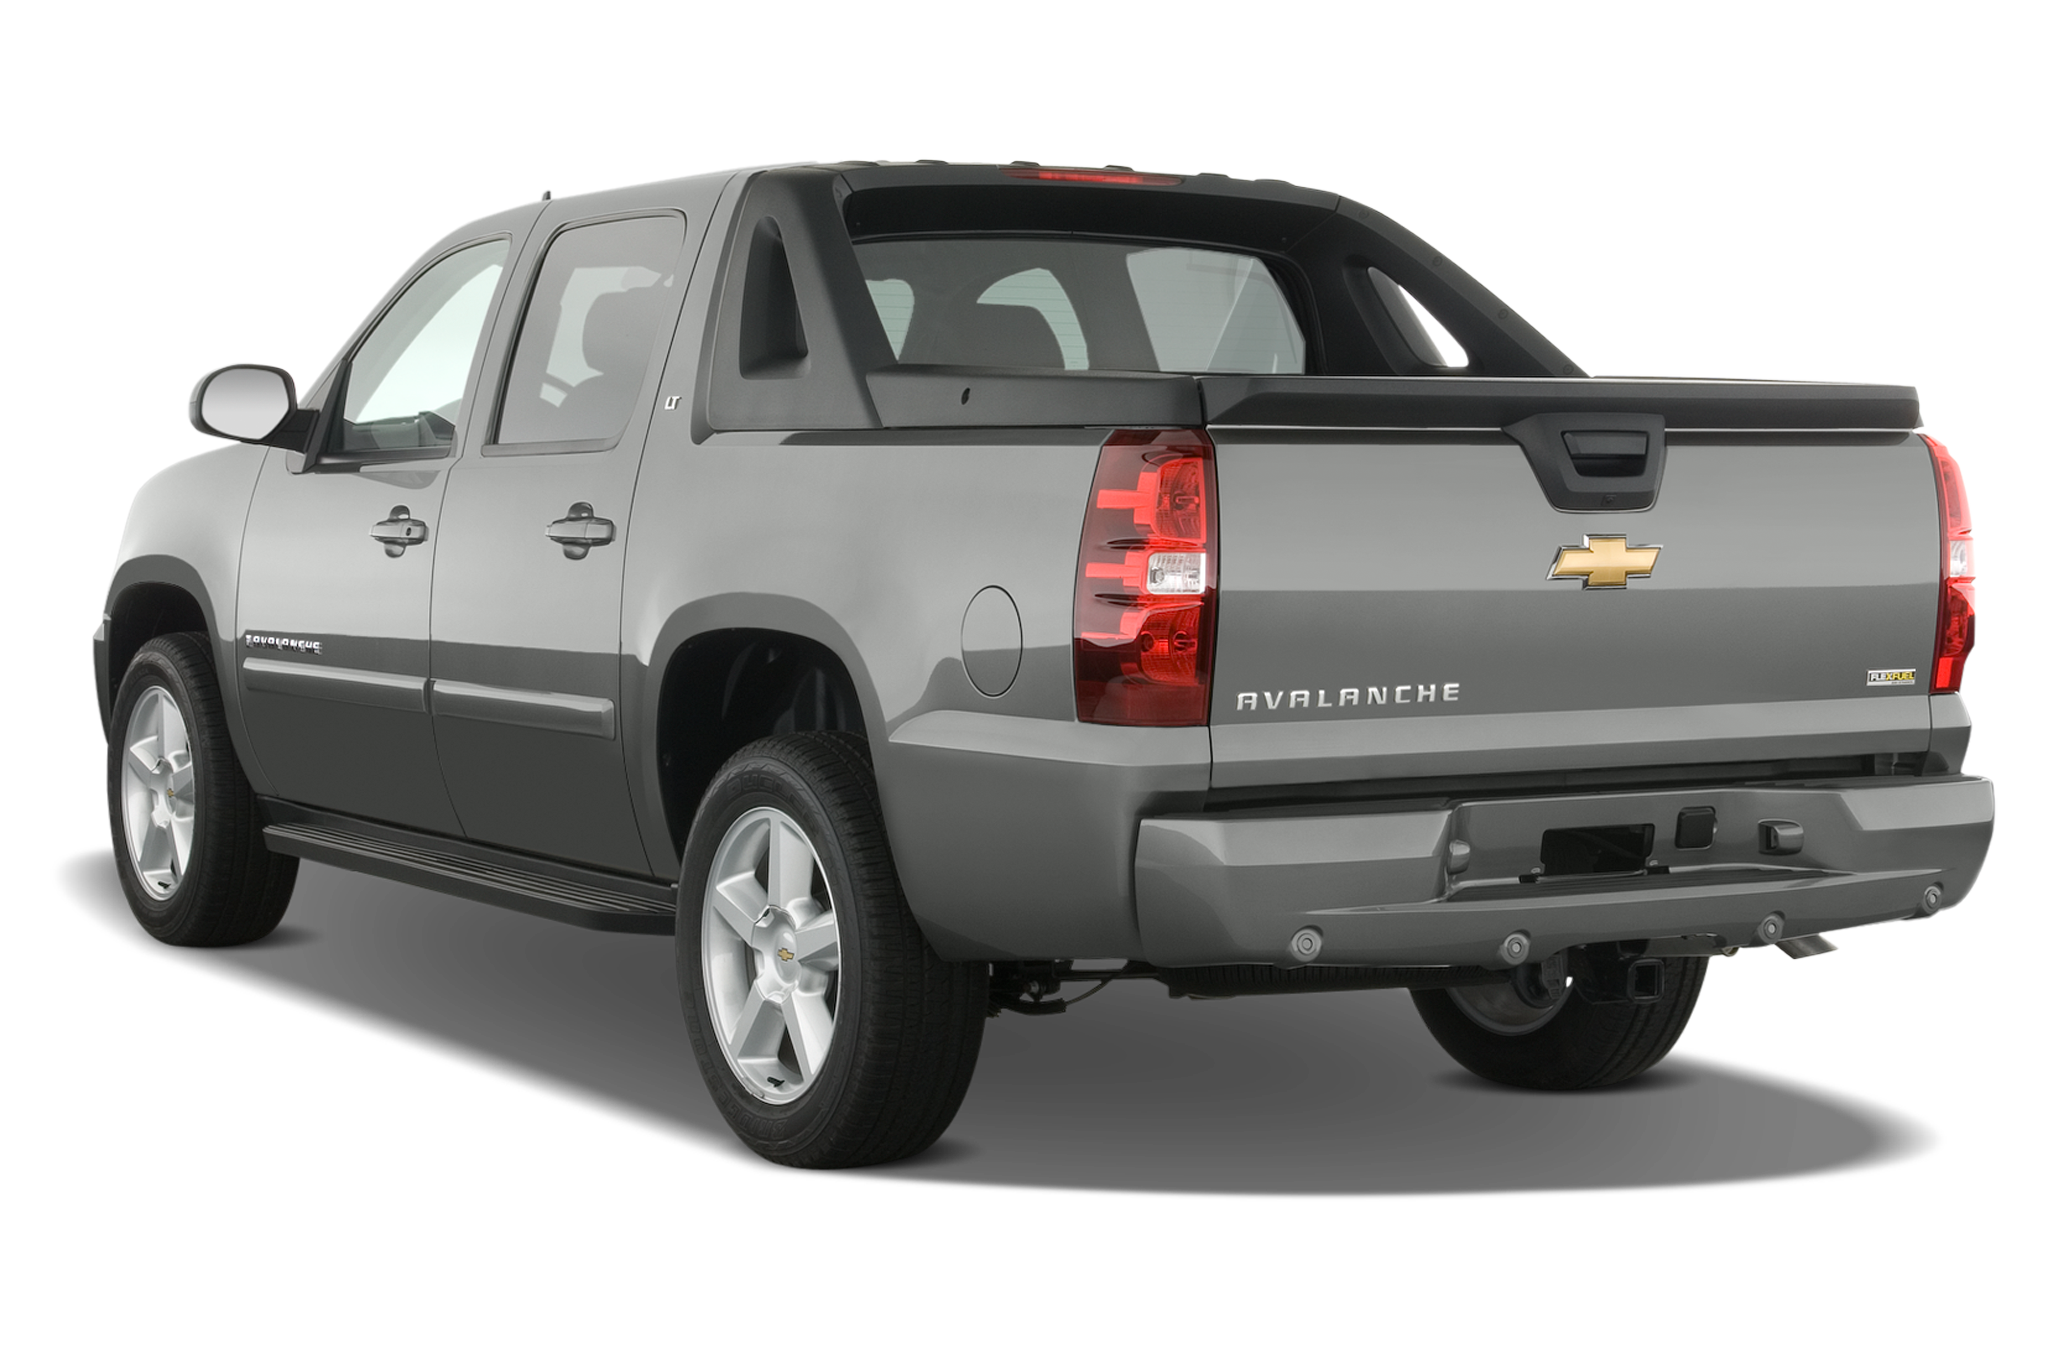 Chevrolet Avalanche II 2006 - 2013 Pickup #4